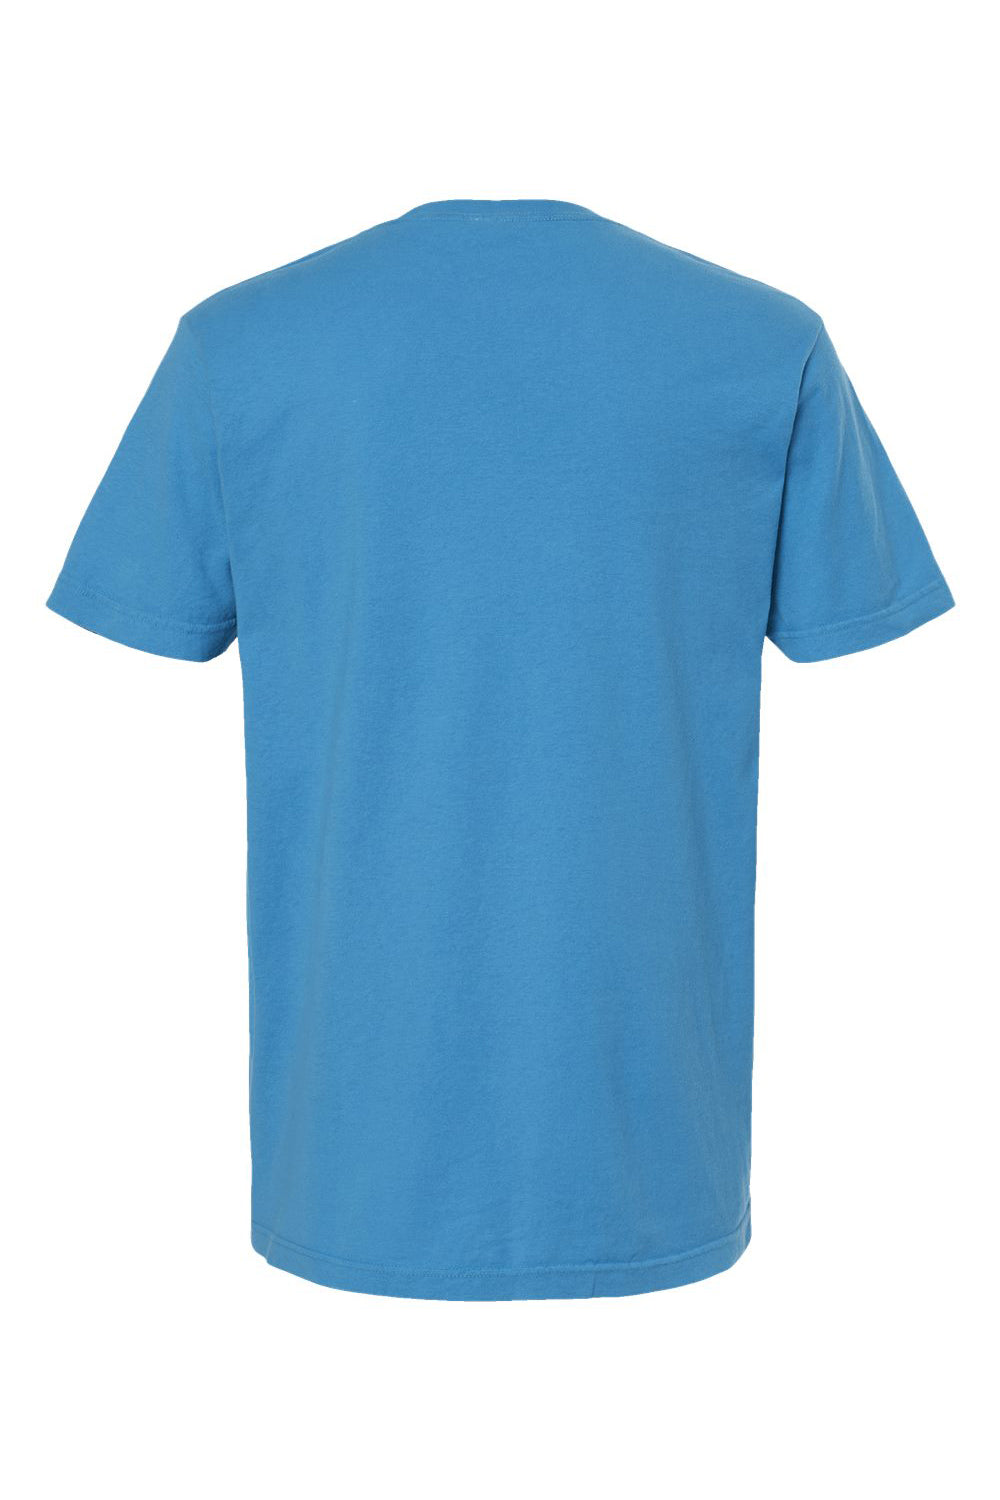 M&O 6500M Mens Vintage Garment Dyed Short Sleeve Crewneck T-Shirt Royal Caribe Blue Flat Back